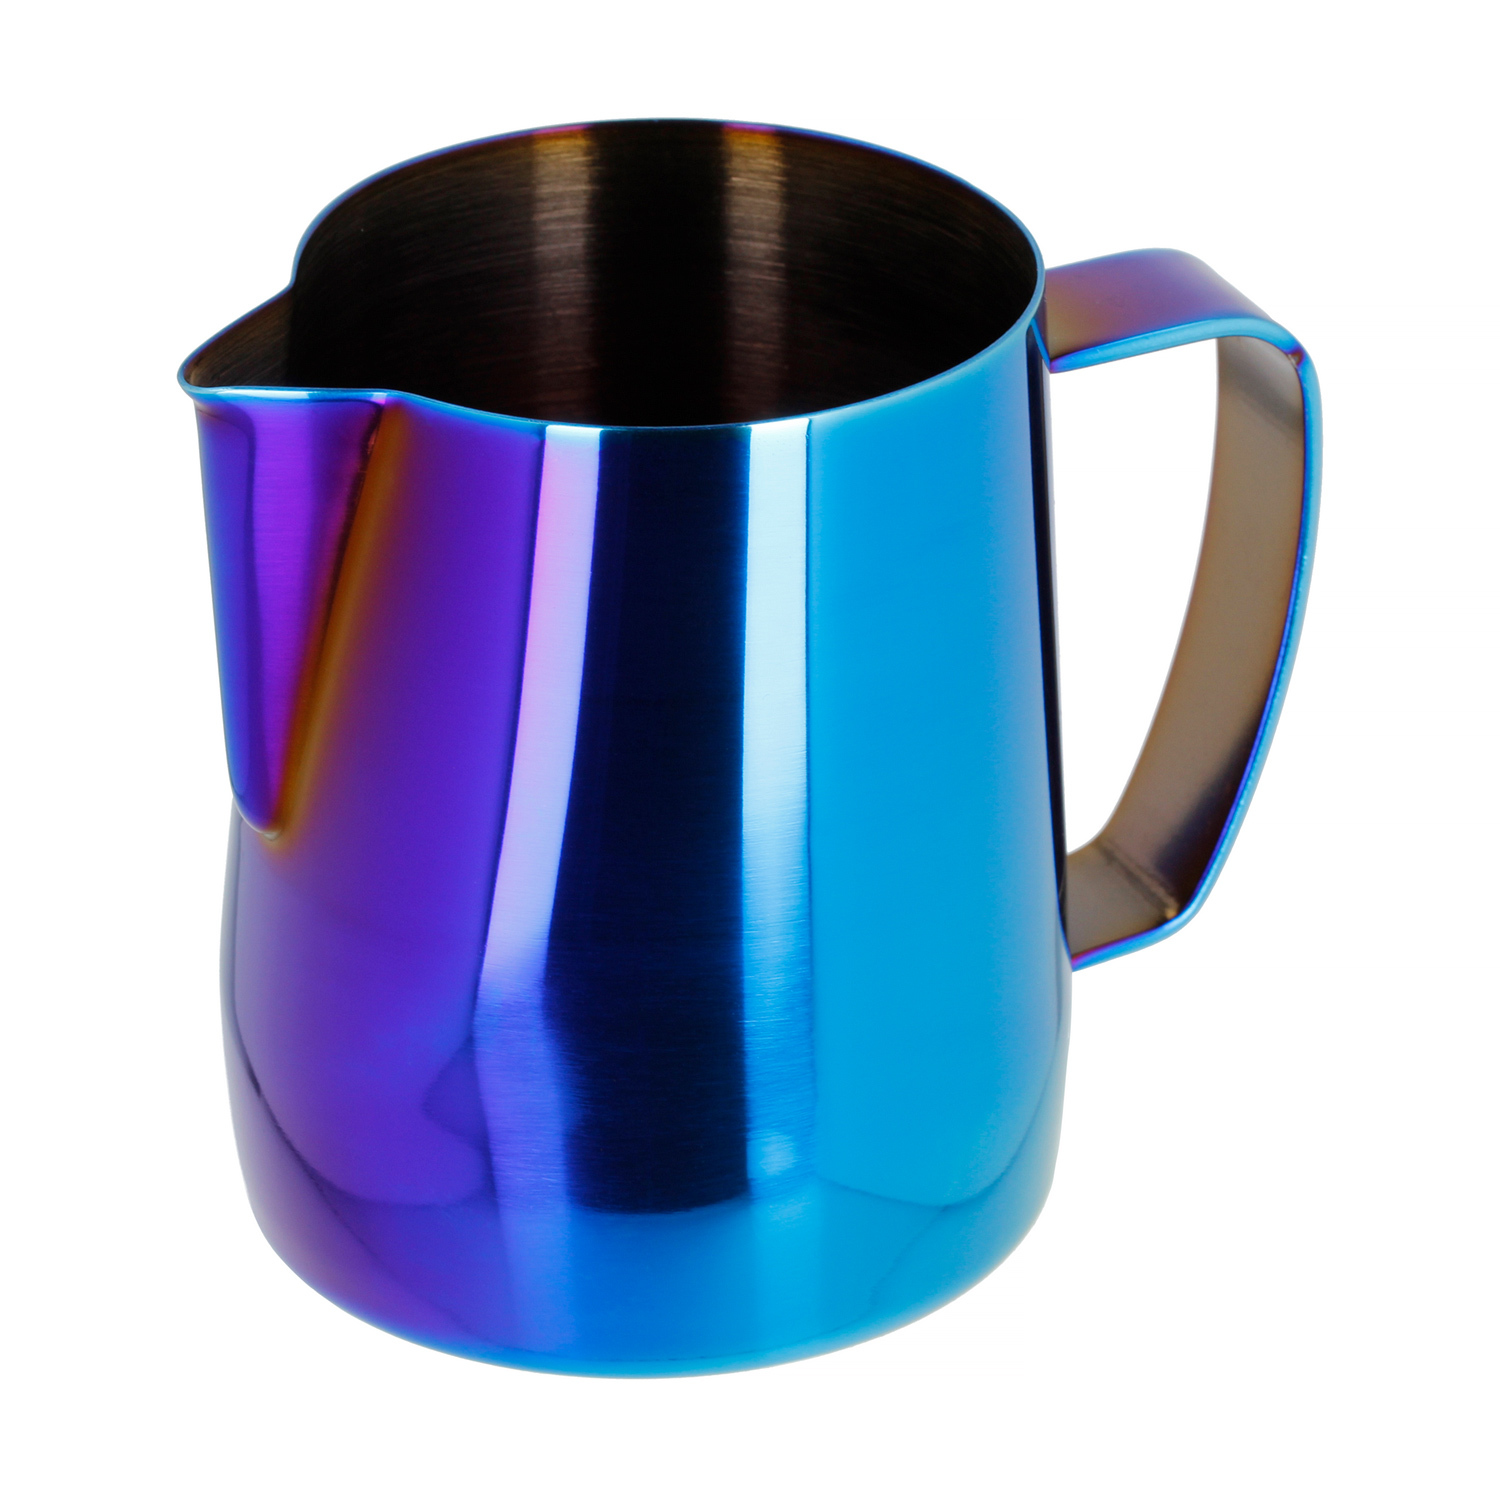 https://www.cremashop.eu/content/galleries/barista-space/milk-pitcher-blue/barista-space-milk-pitcher-blue-3072.jpeg